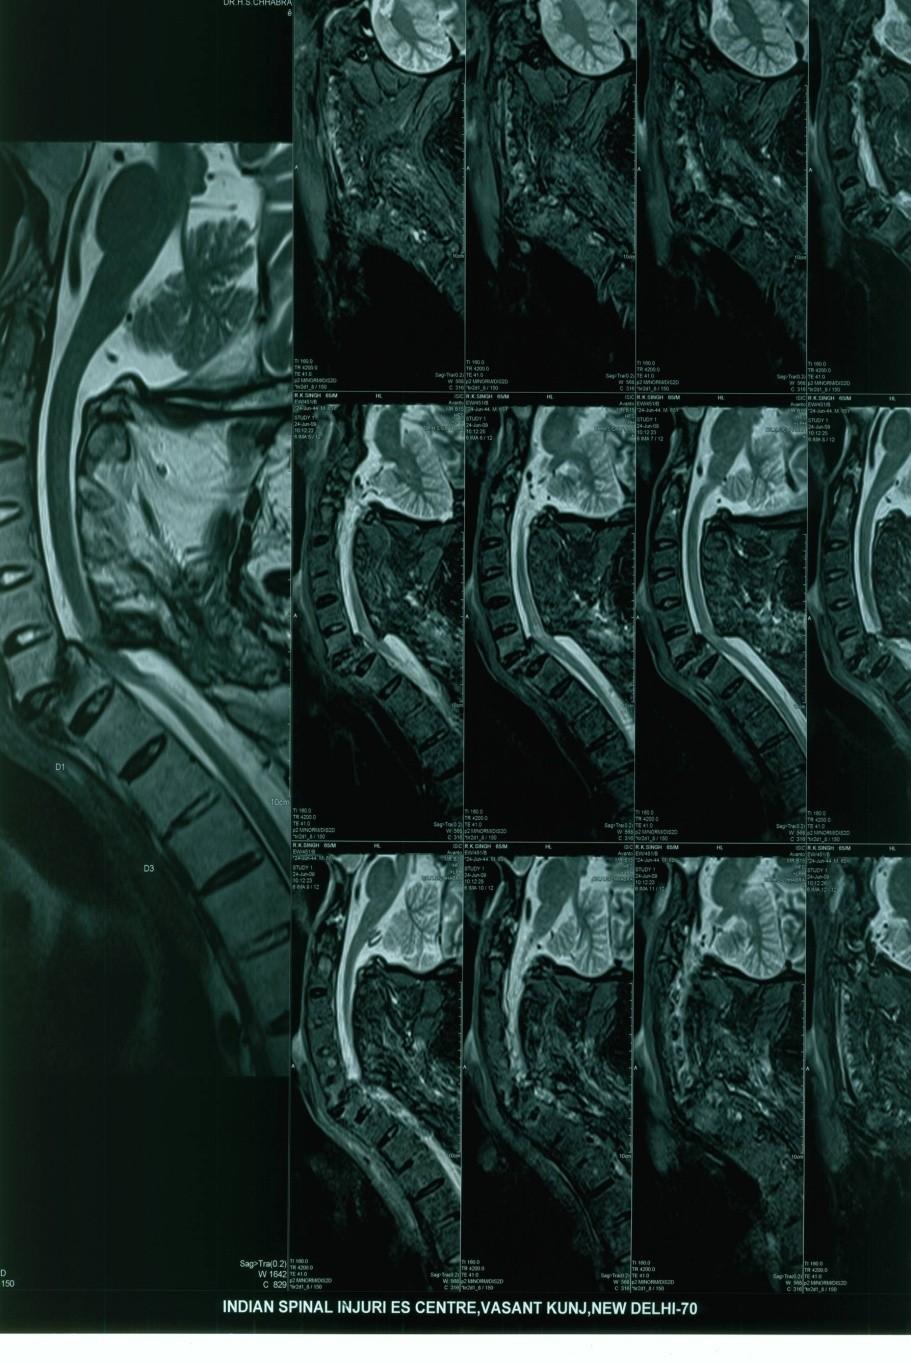 INVESTIGATIONS MRI : C6 & C7 HAVE MALUNITED IN A